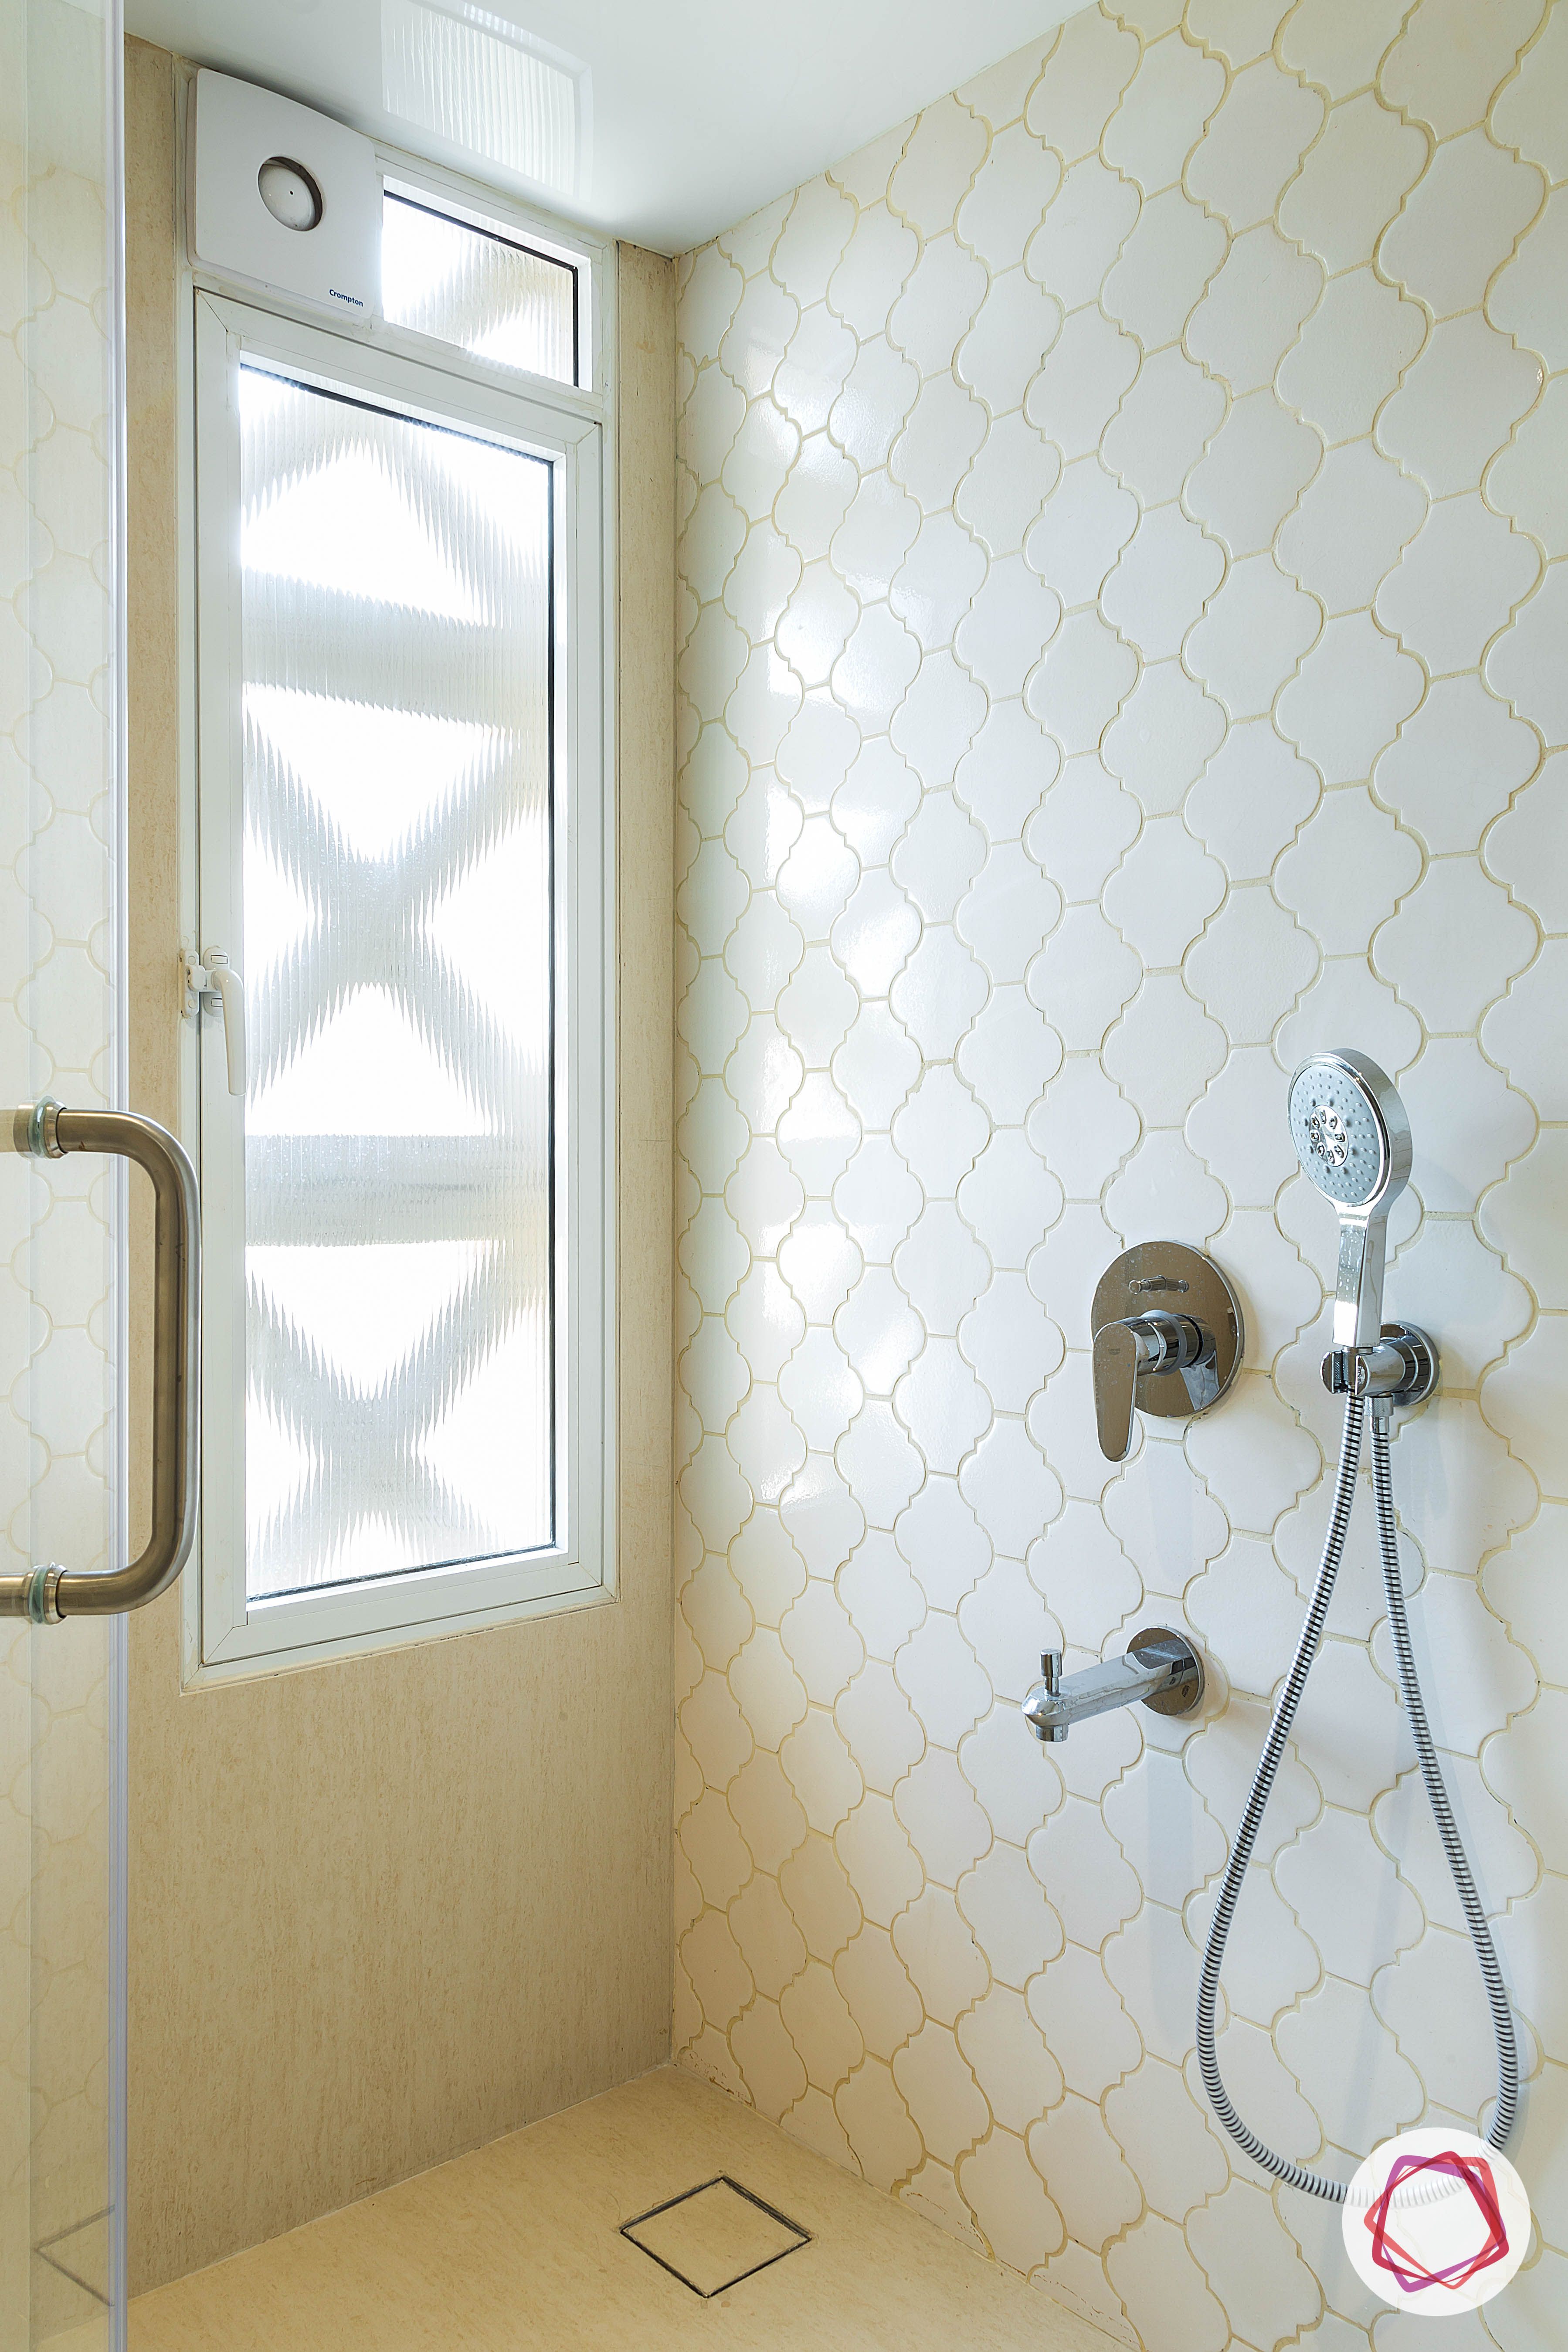 4bhk house plan-bathroom designs-bathroom tiles-moroccan tiles